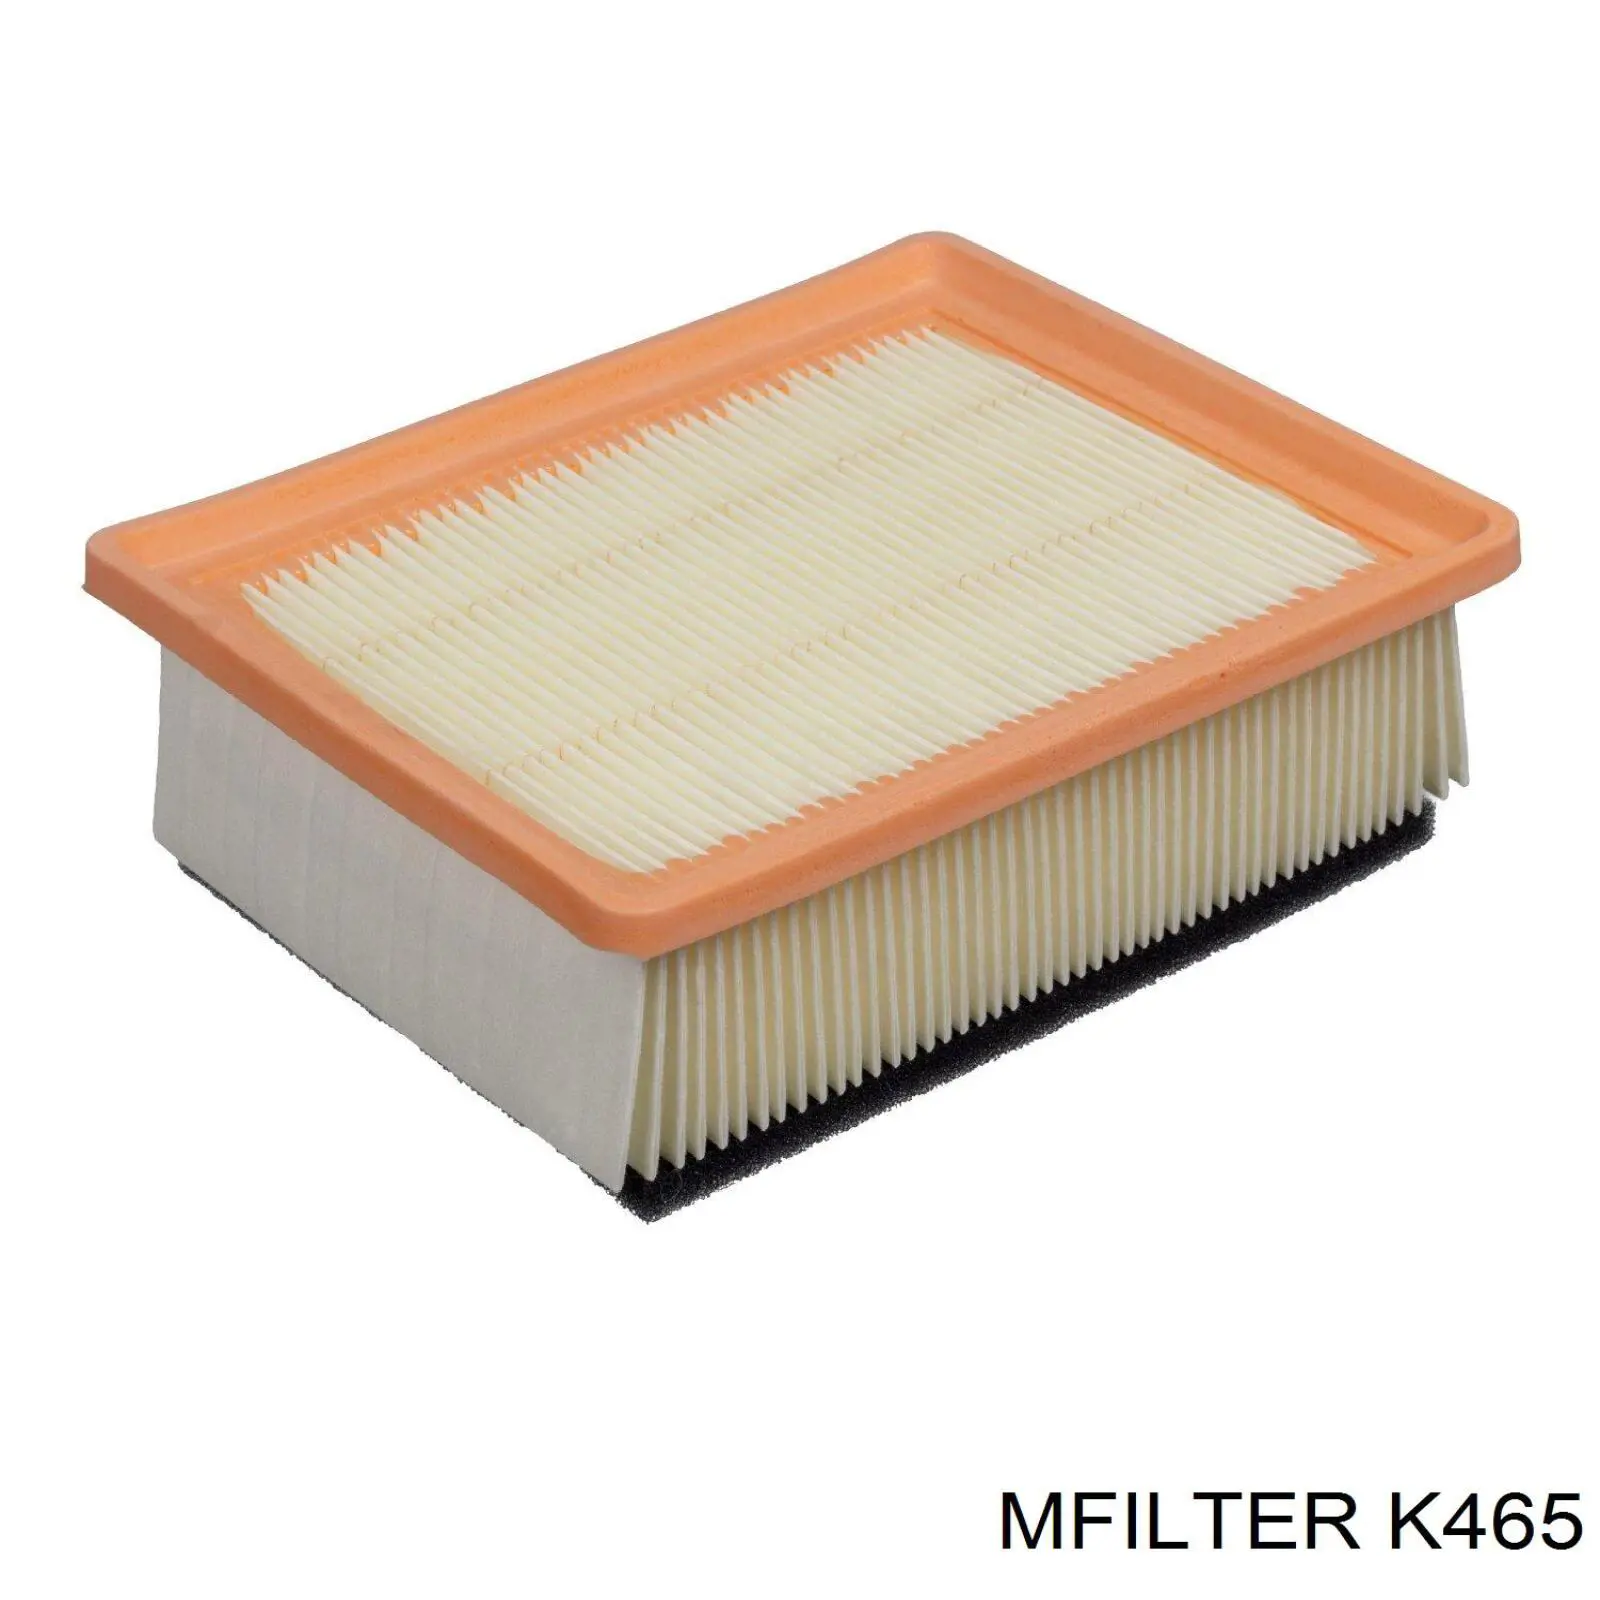 K465 Mfilter filtro de aire